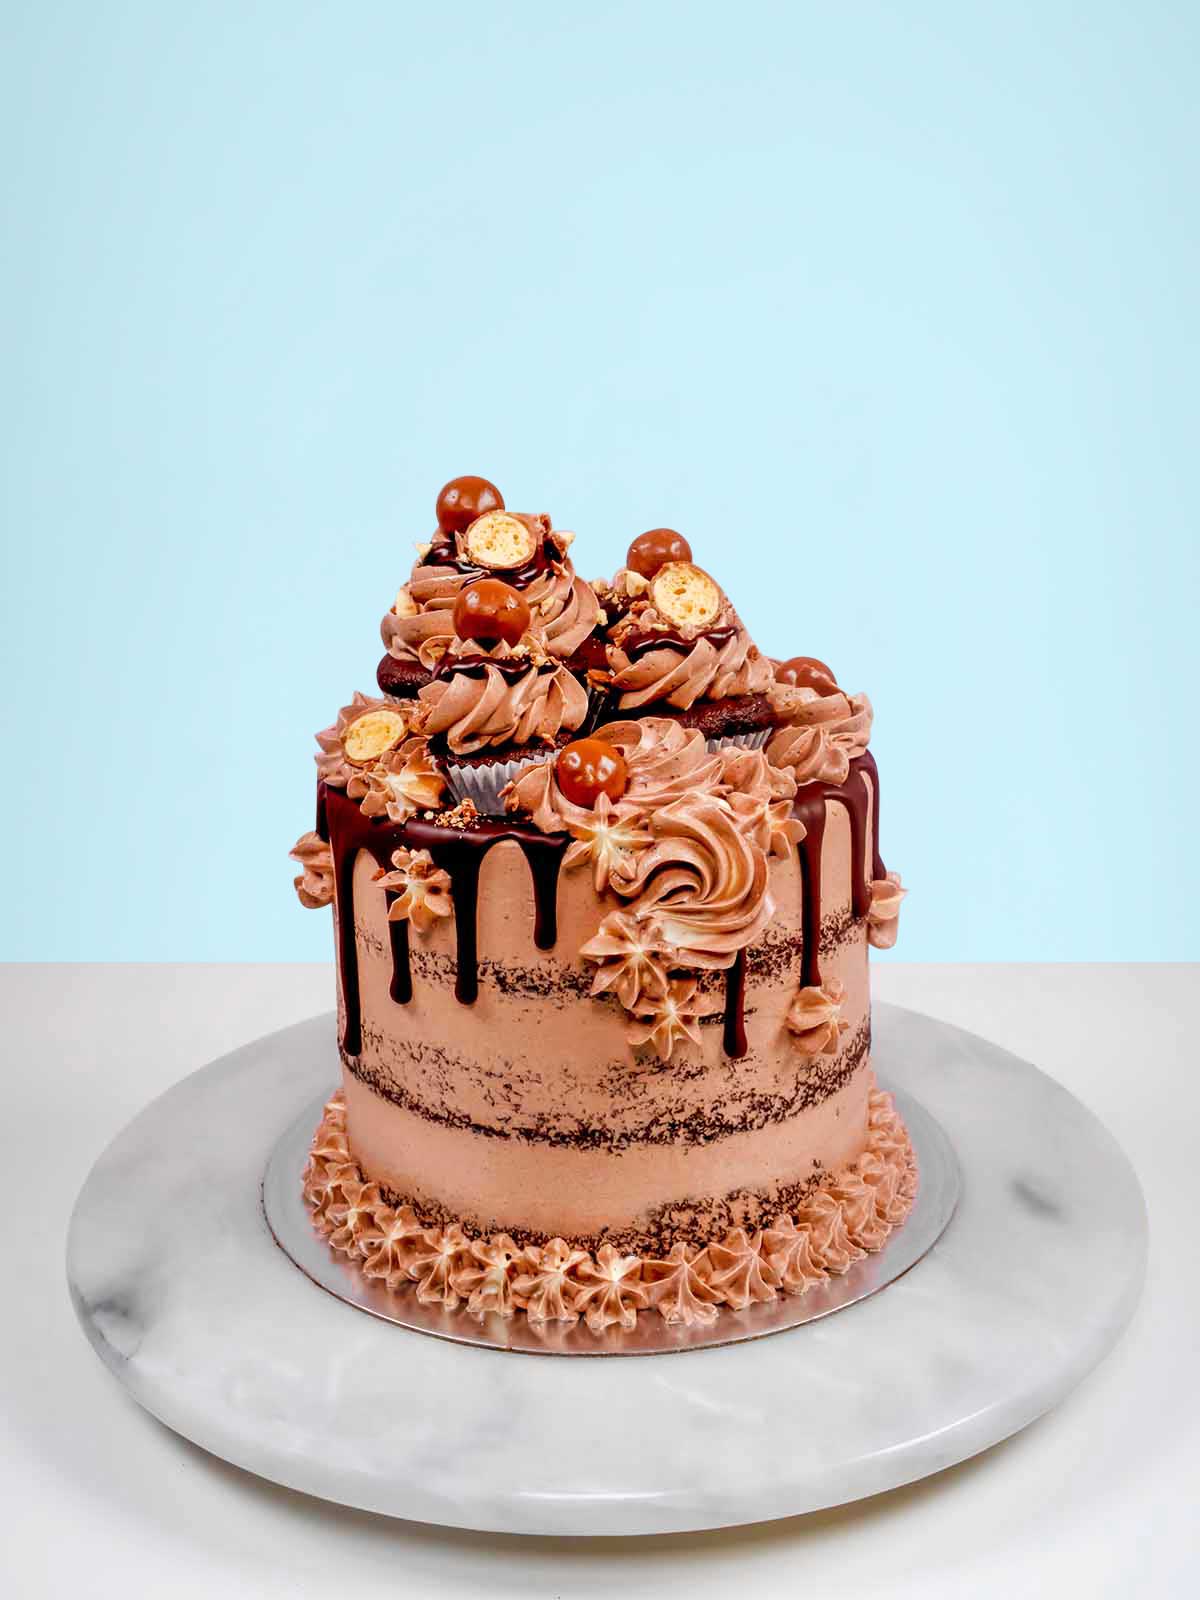 40 Cute Cake Ideas For Any Celebration : Chocolate Birthday Cake for 60th  Birthday